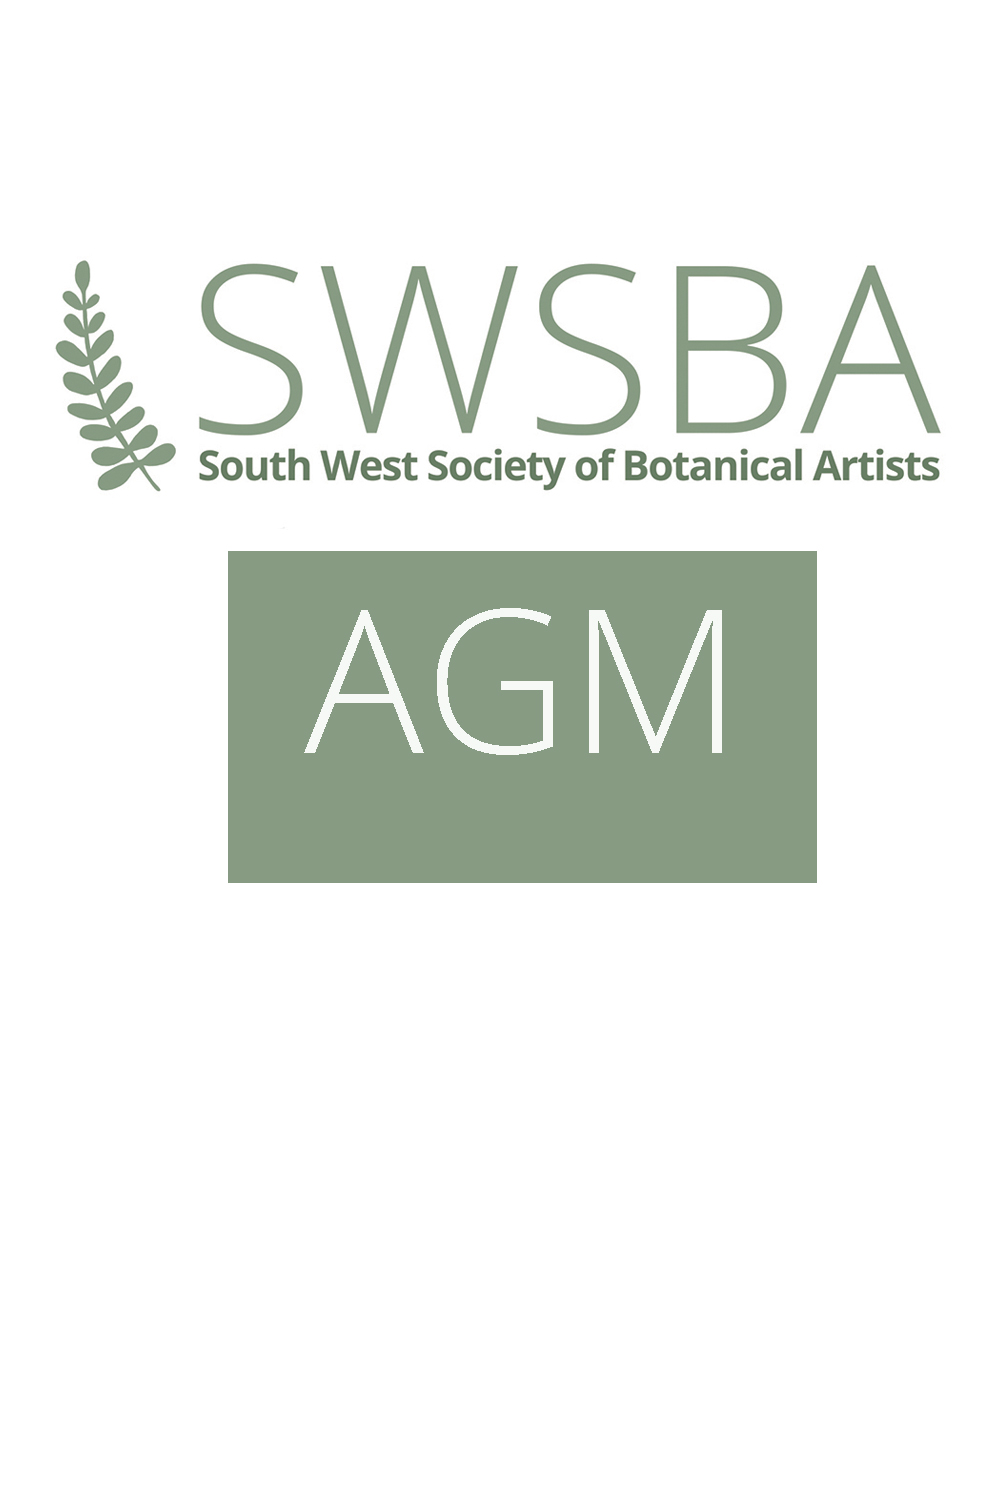 SWSBA Annual General Meeting